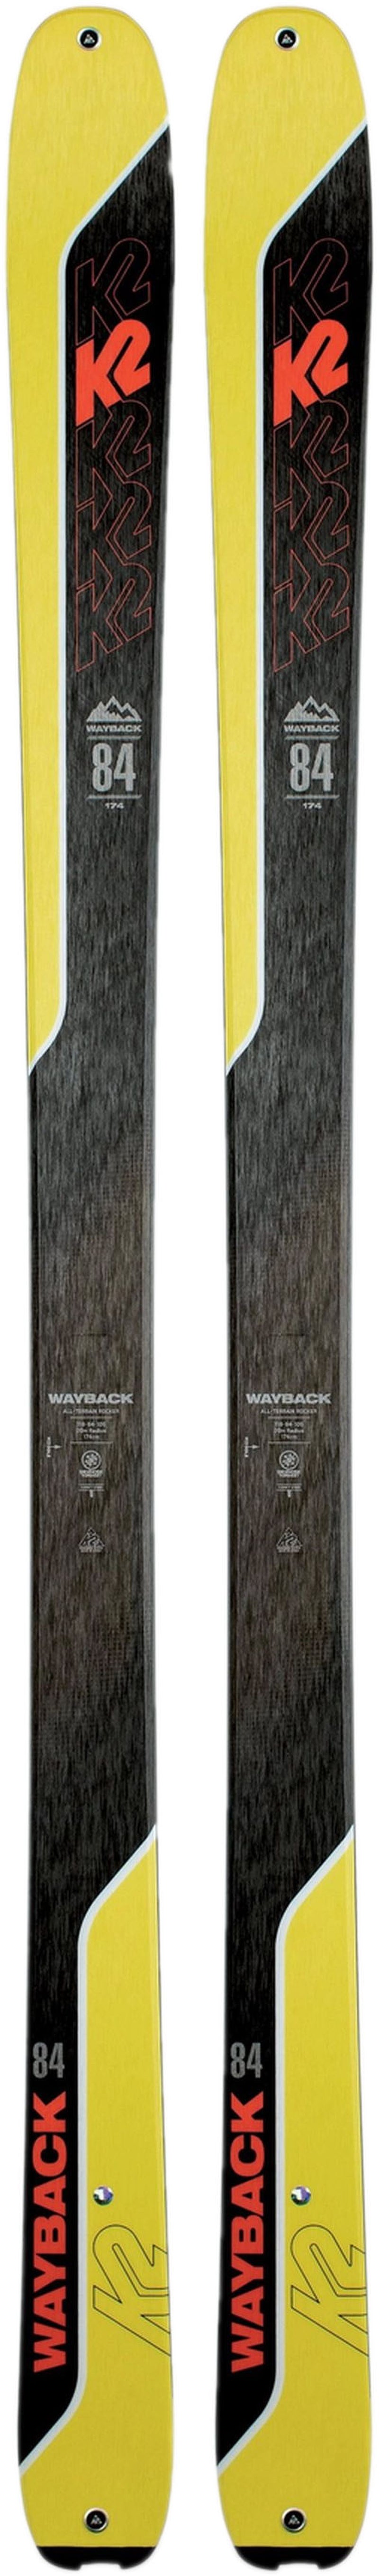 WAYBACK 84 LTD